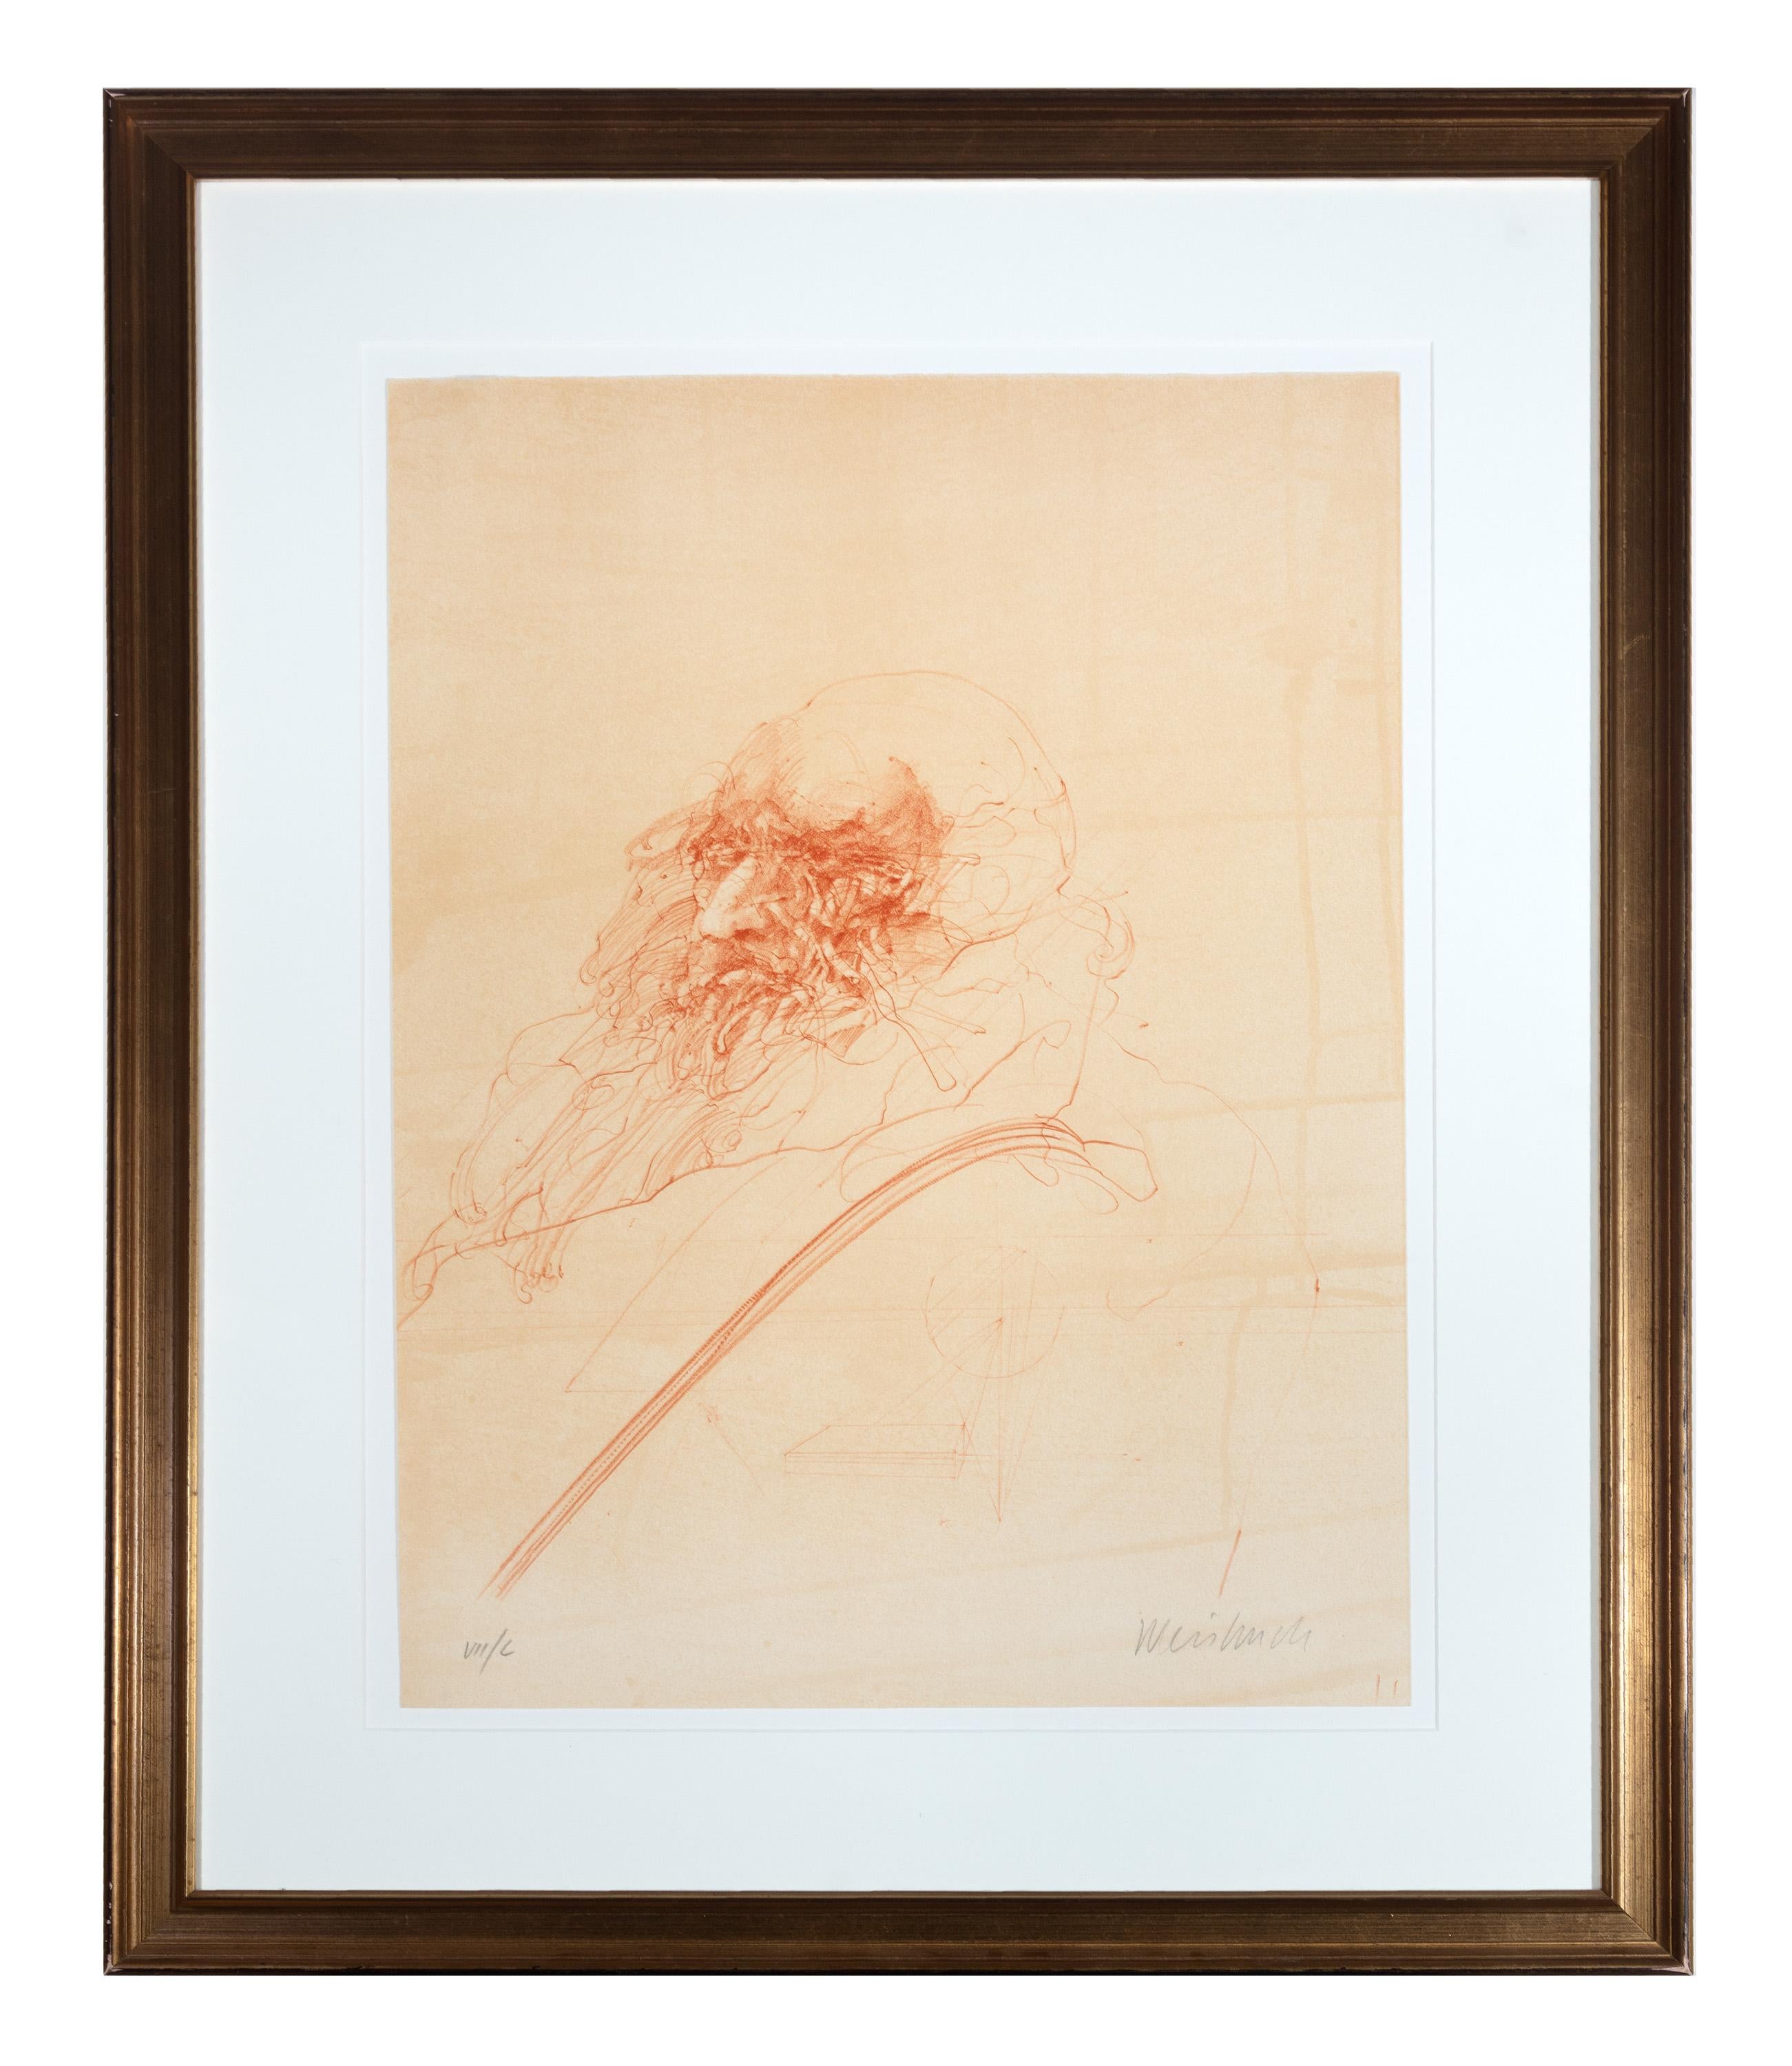 Homage A Leonard de Vinci (Portrait of Leonardo) Original lithograph - Print by Claude Weisbuch